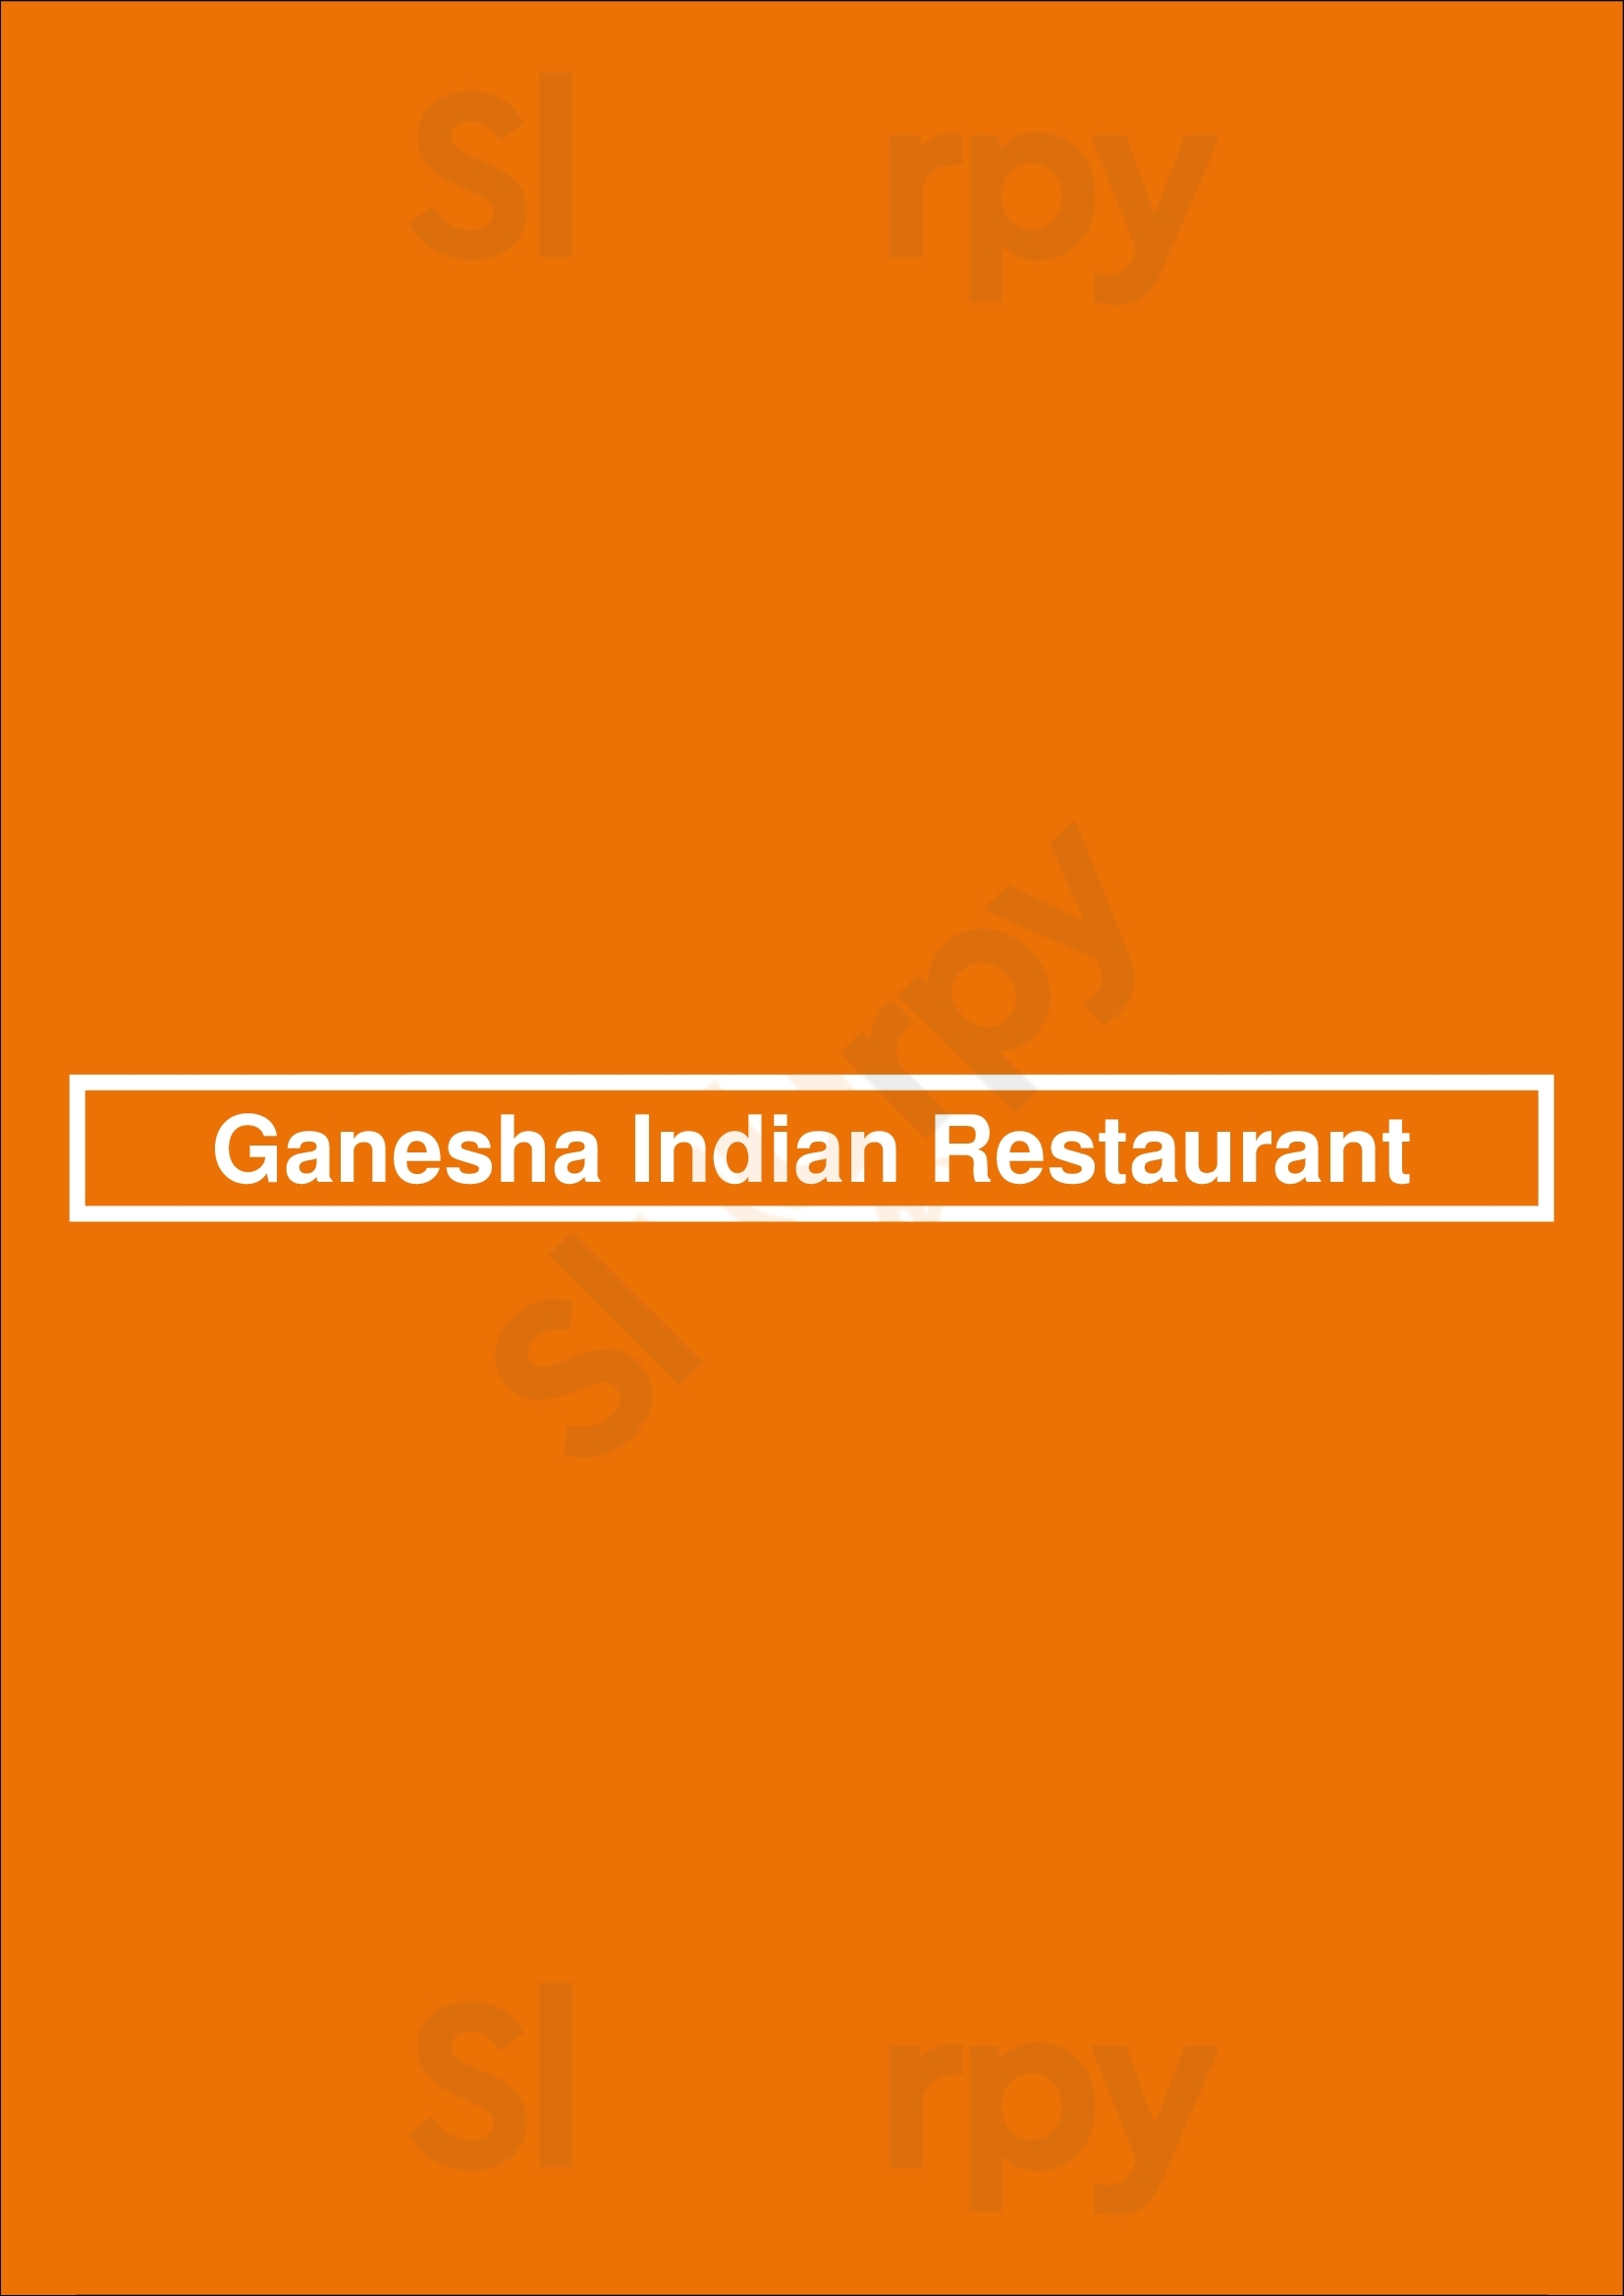 Ganesha Indian Restaurant Amsterdam Menu - 1